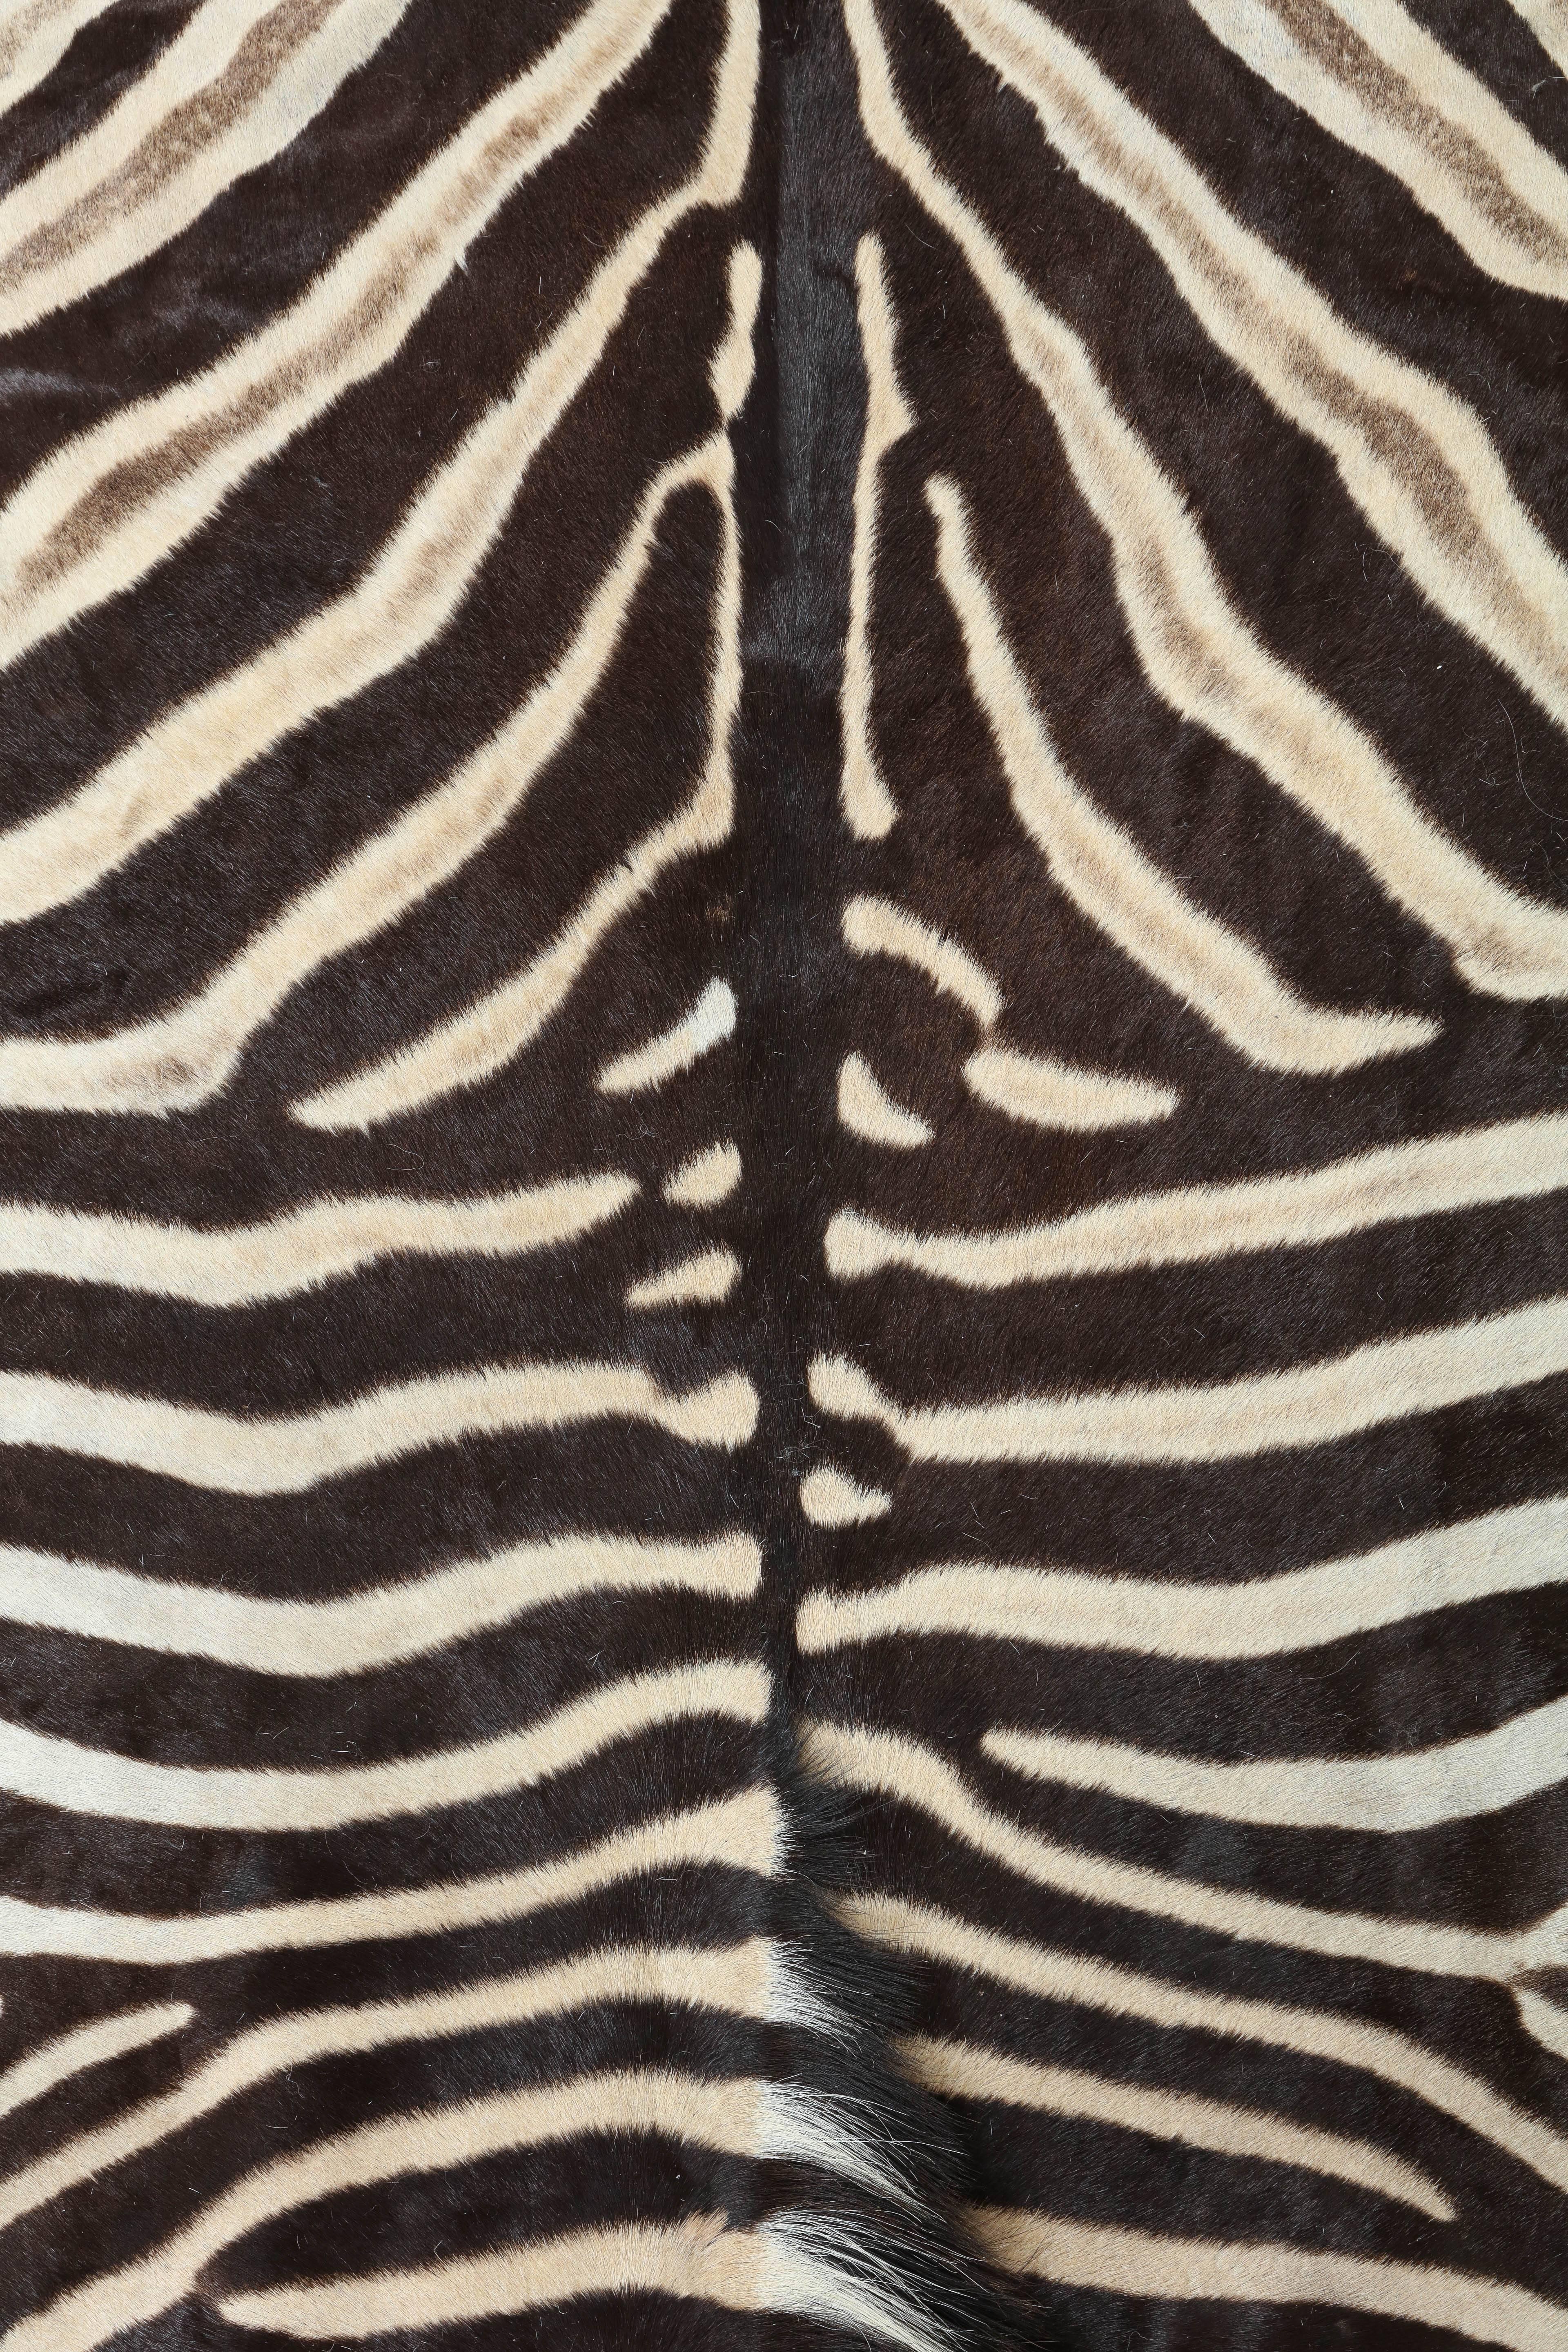 vintage zebra